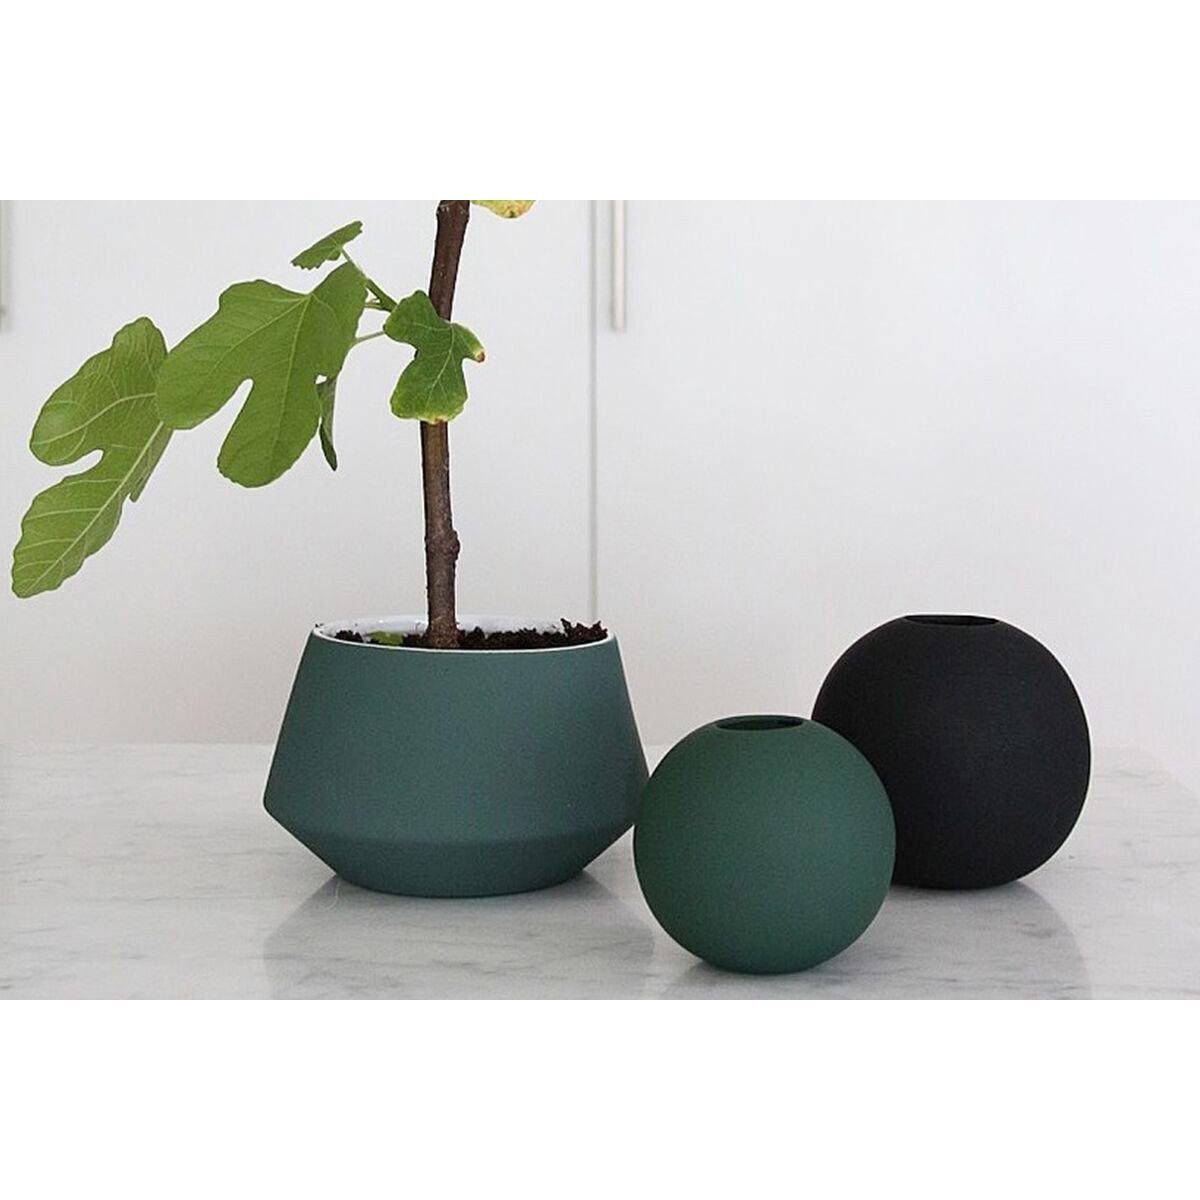 Cooee Design Dekovase (8cm) Black Vase Ball